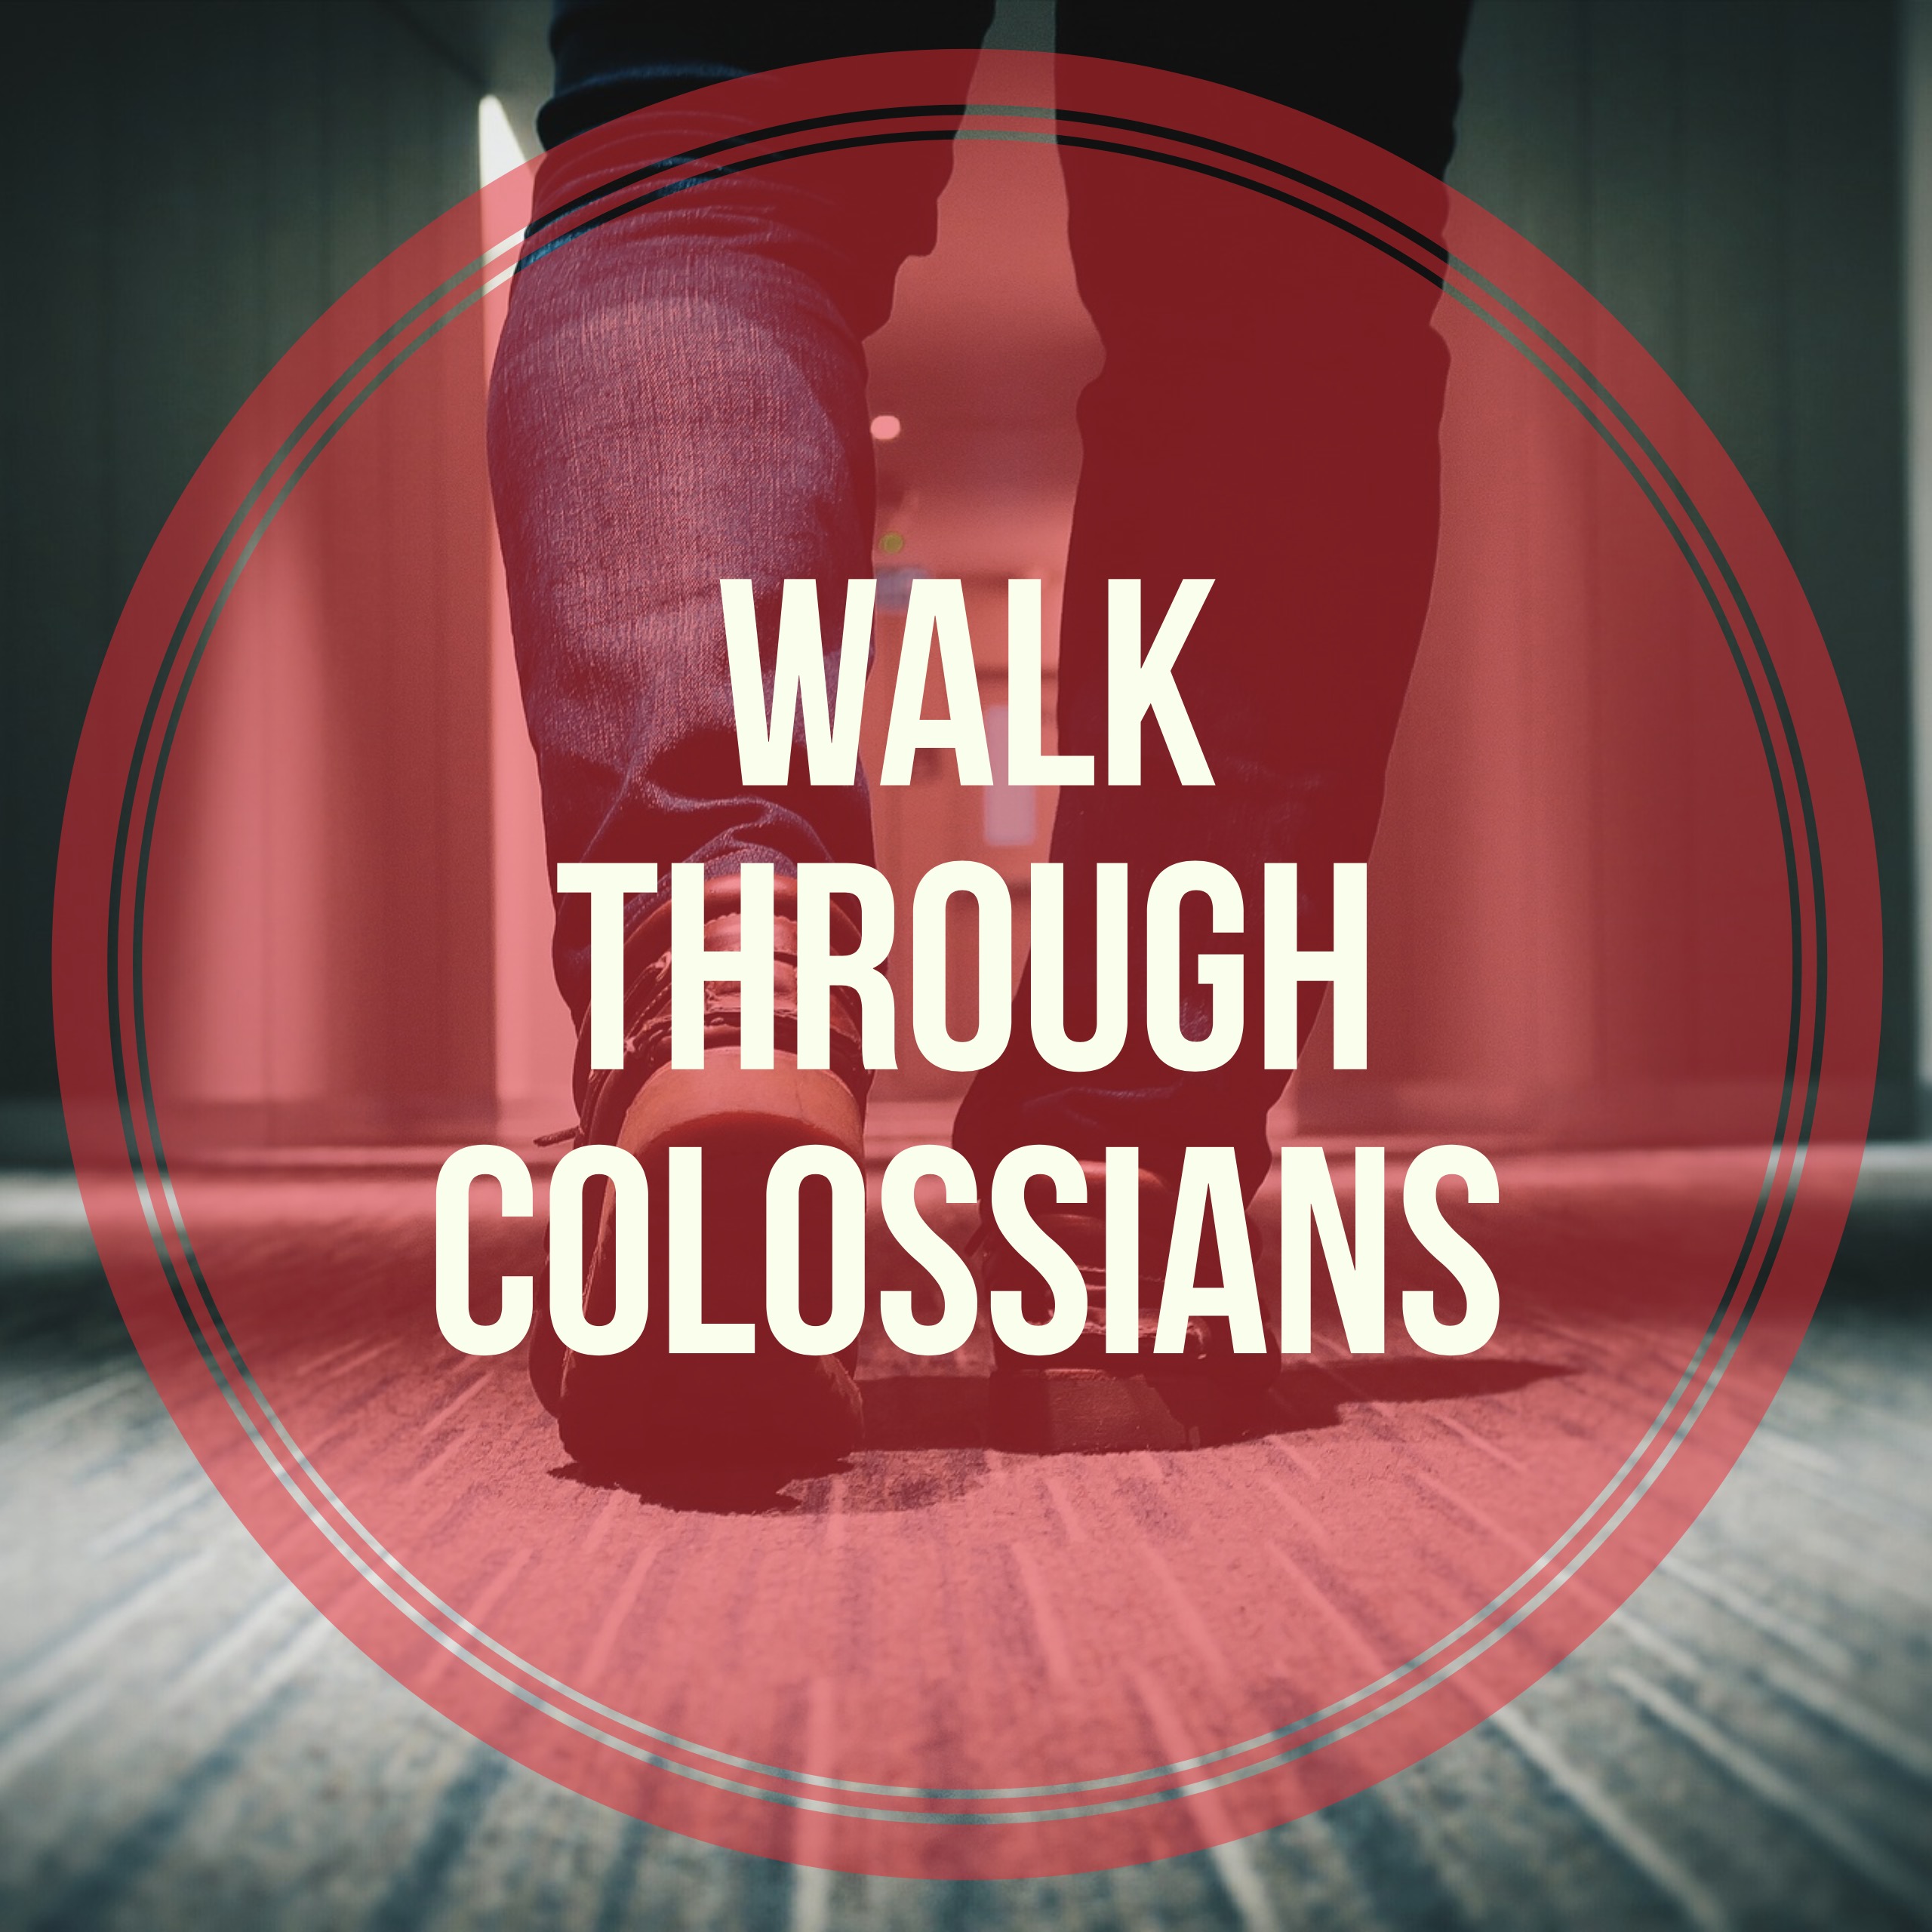 Mar 12, 2017: Walk Through Colossians (Wk 7) - 